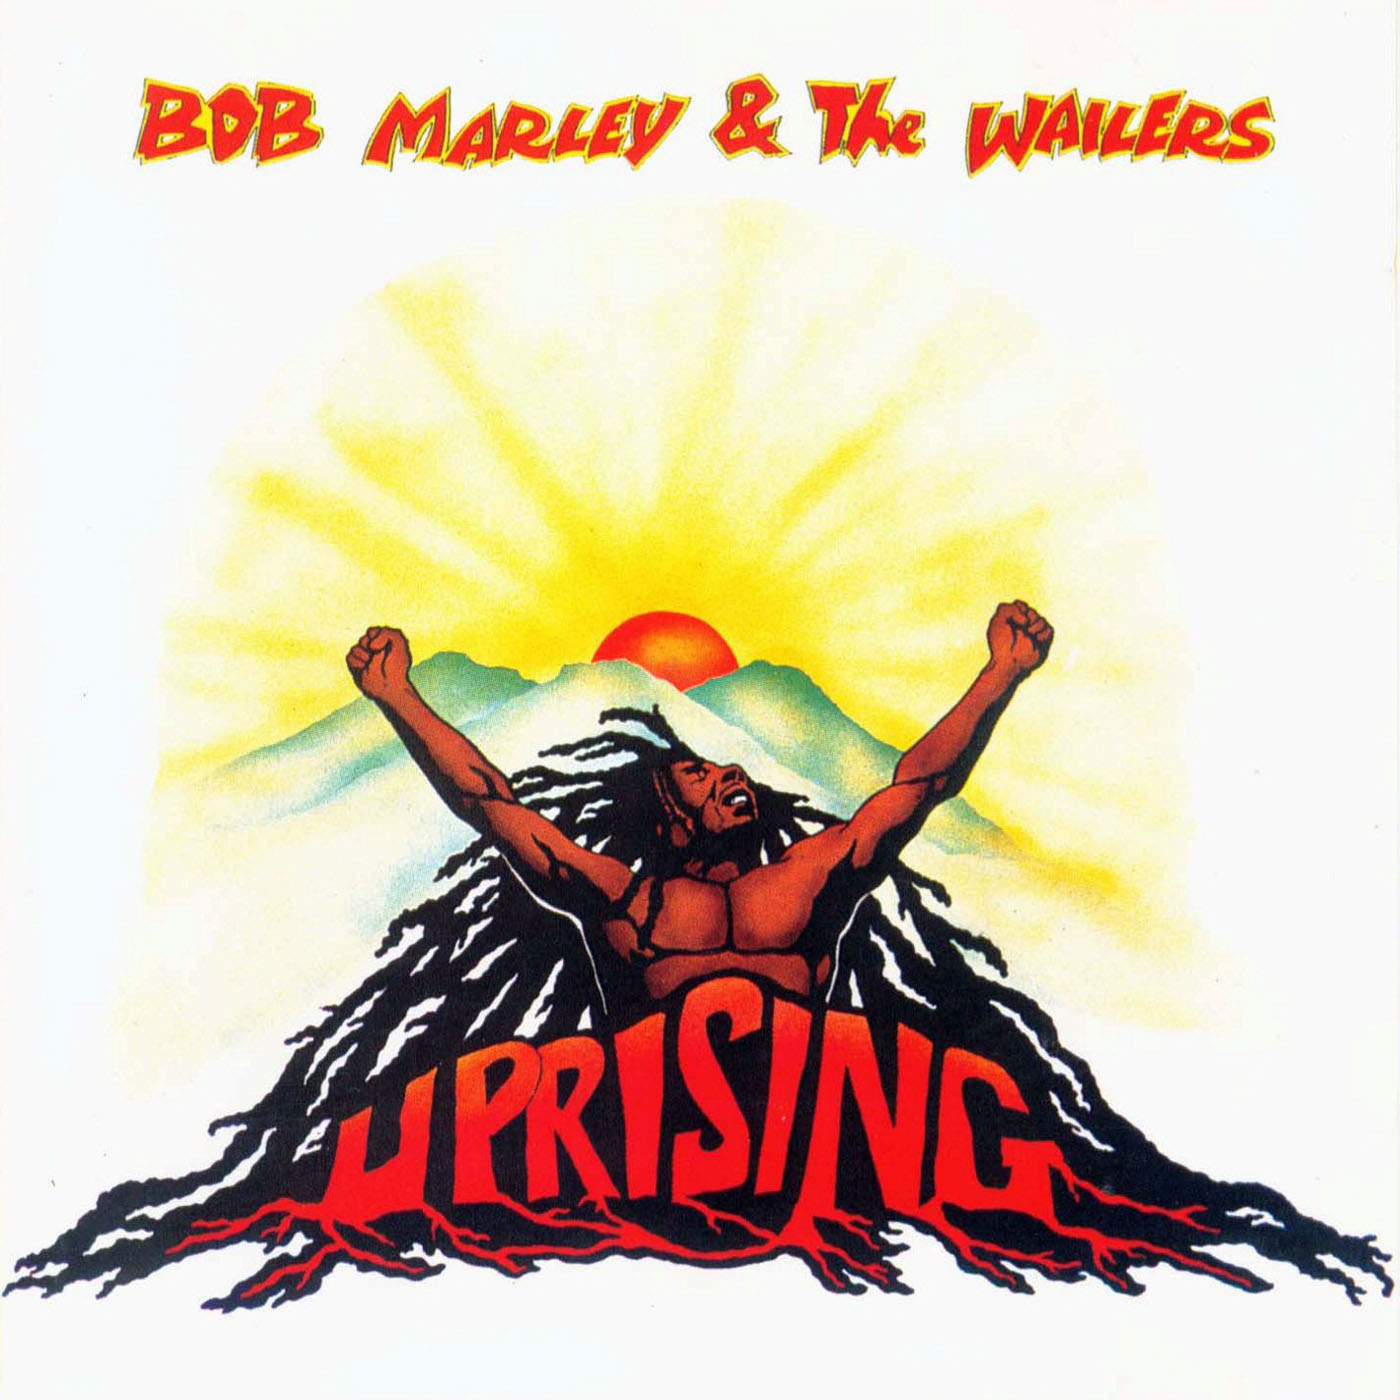 Uprising by Bob Marley & The Wailers